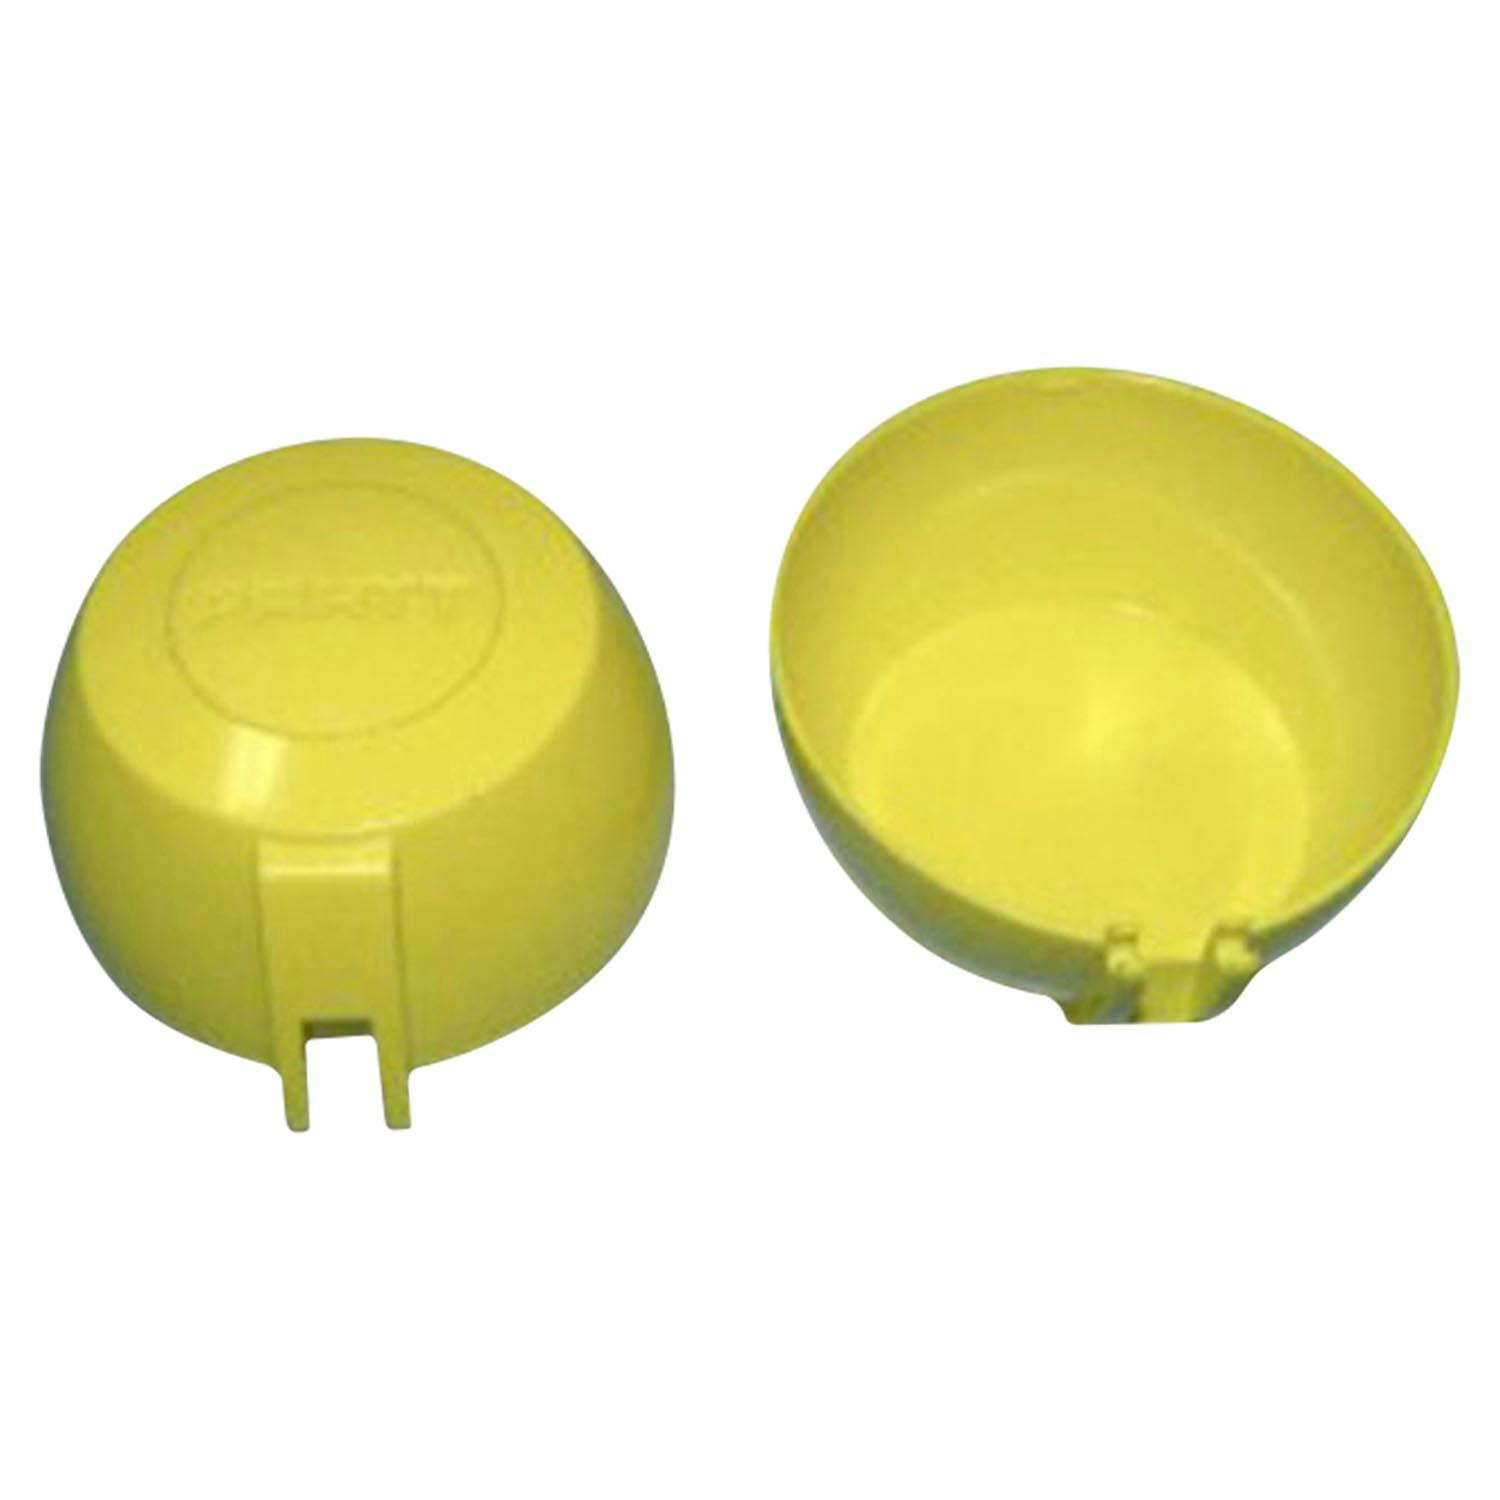 Pratt Dust Cover Caps For Single Eye Wash Nozzle Assembly Pk Of 2